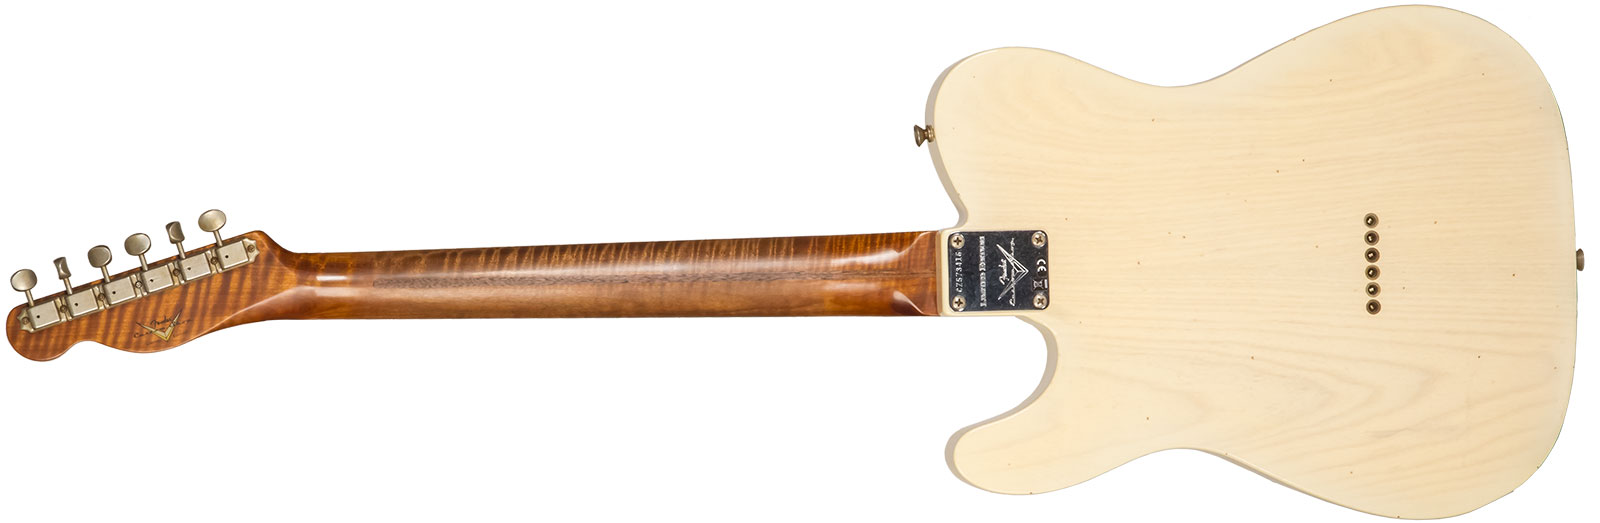 Fender Custom Shop Tele 1955 2s Ht Mn #cz573416 - Journeyman Relic Nocaster Blonde - Televorm elektrische gitaar - Variation 1